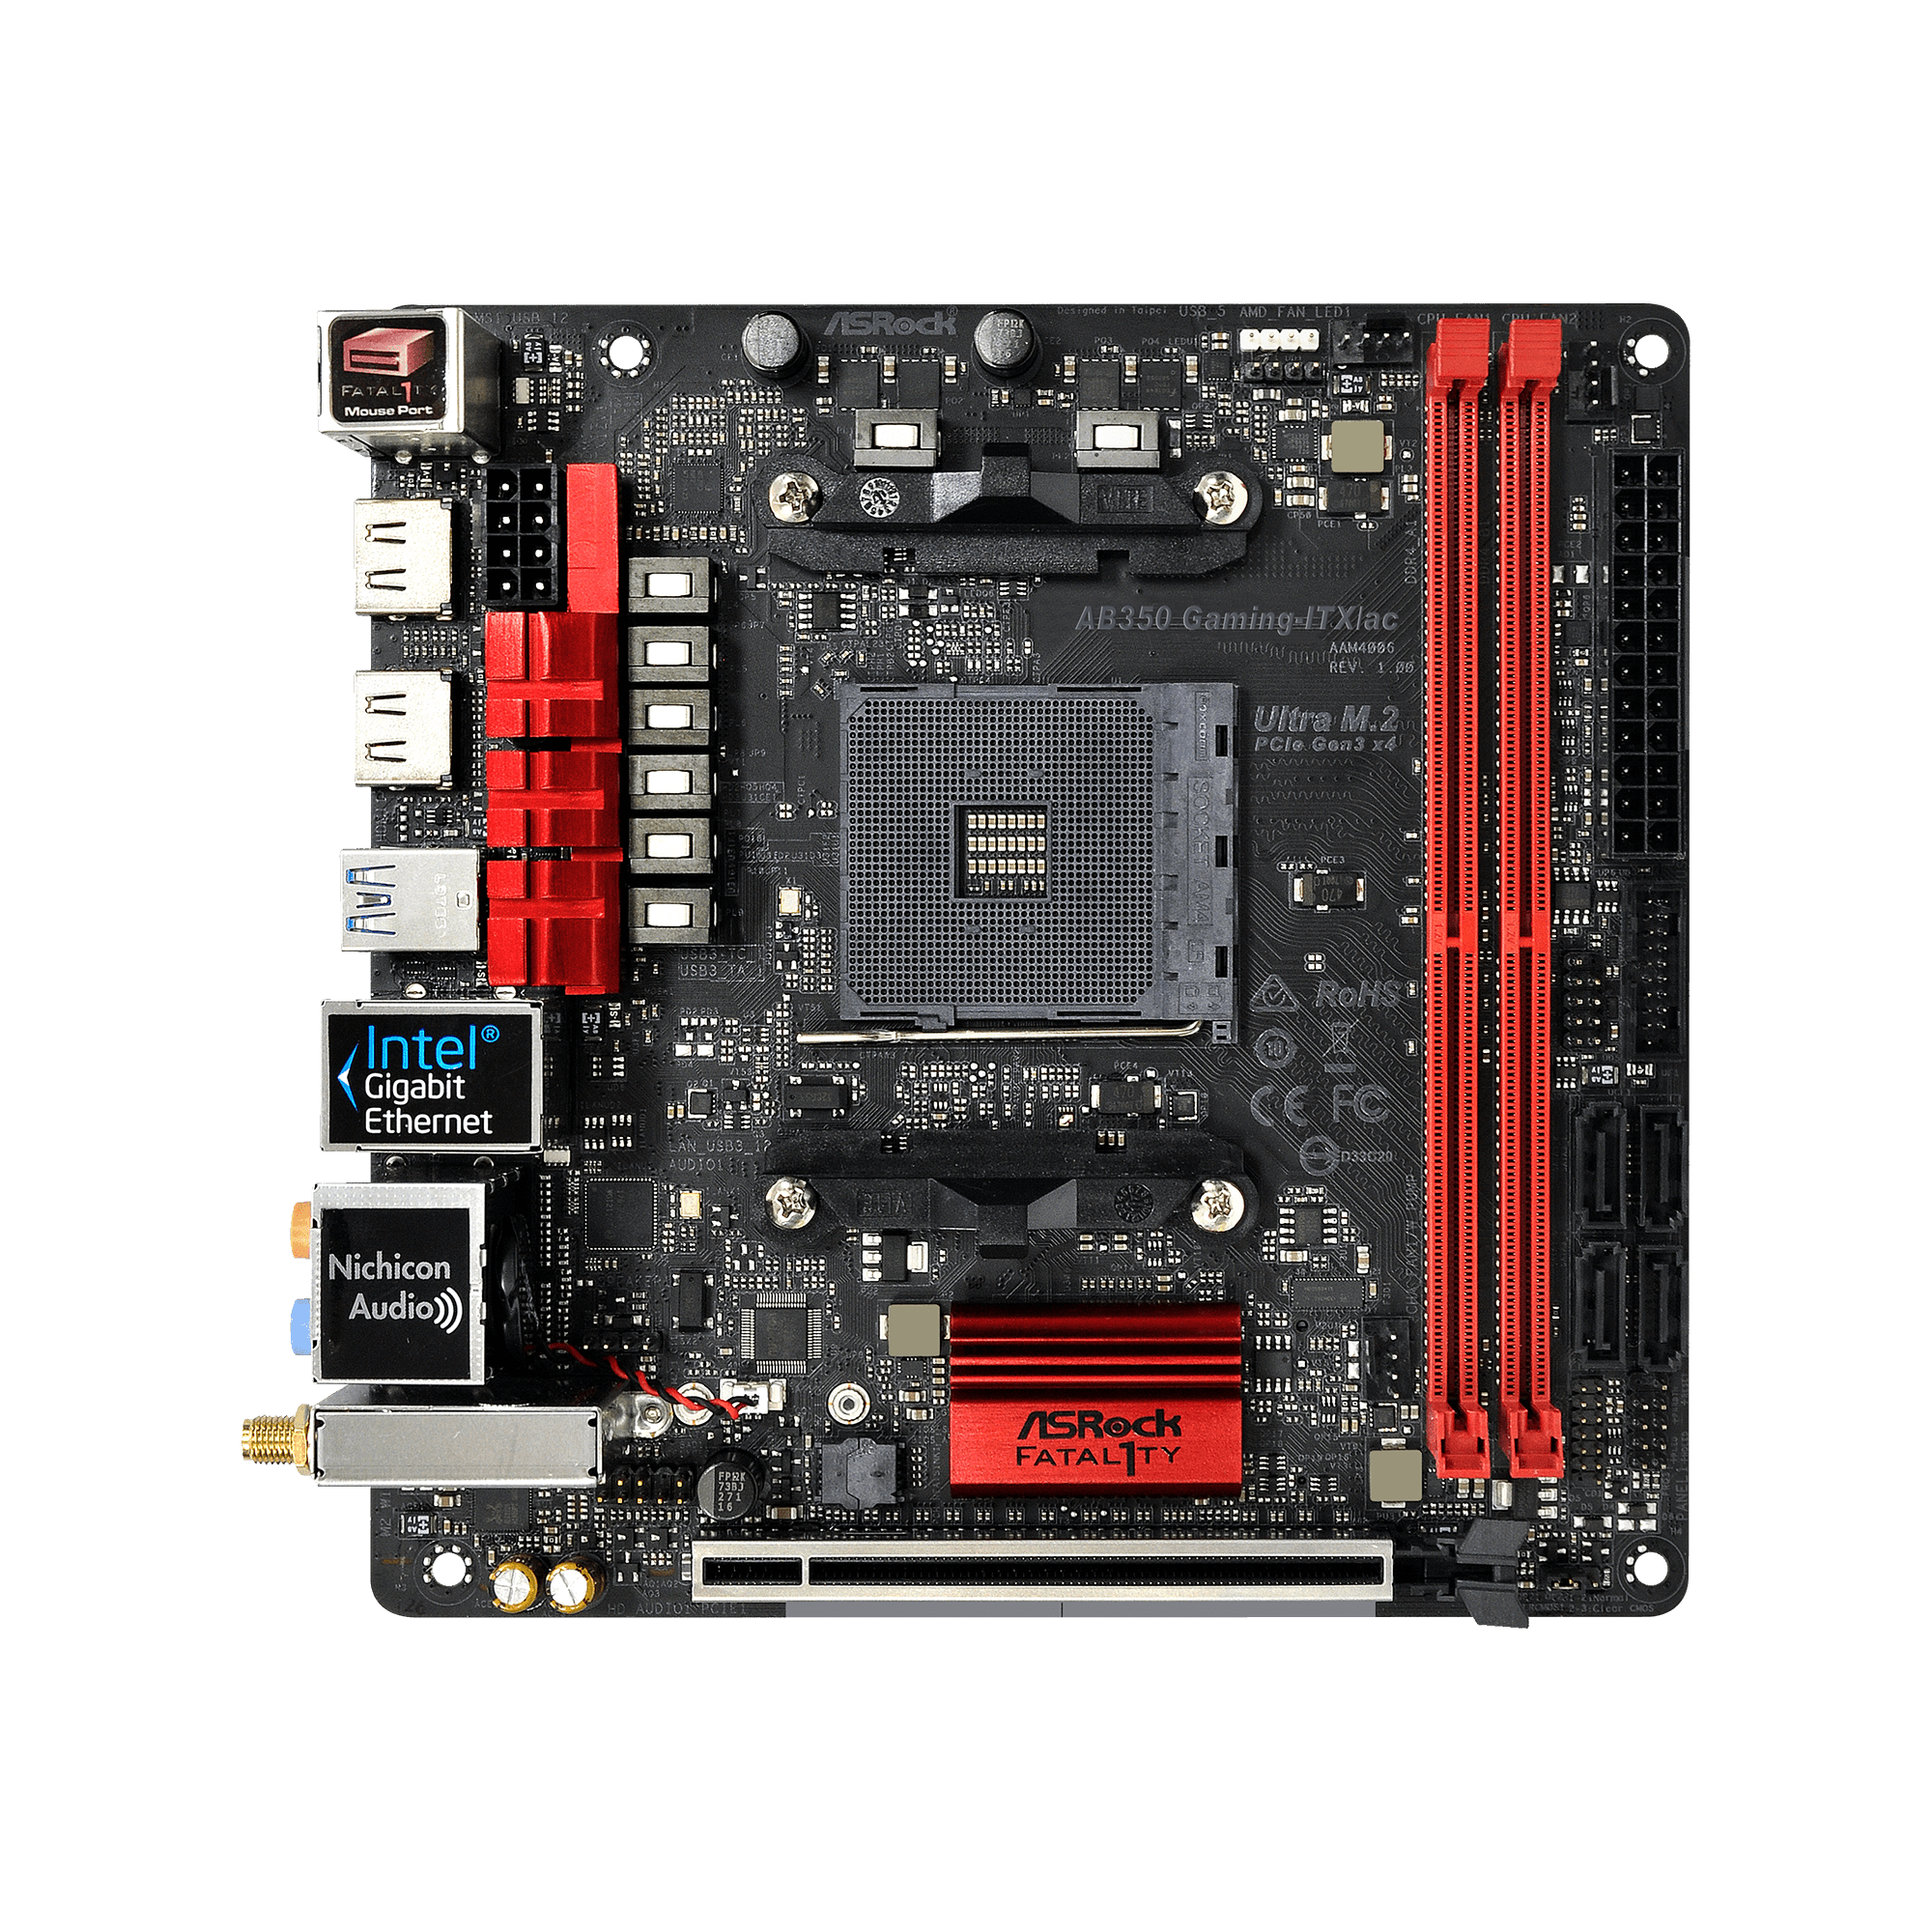 AB350 Gaming-ITX/ac | ASRock(アスロック) SocketAM4 AMD B350 Mini-ITX マザーボード | CFD販売株式会社 Sales INC.